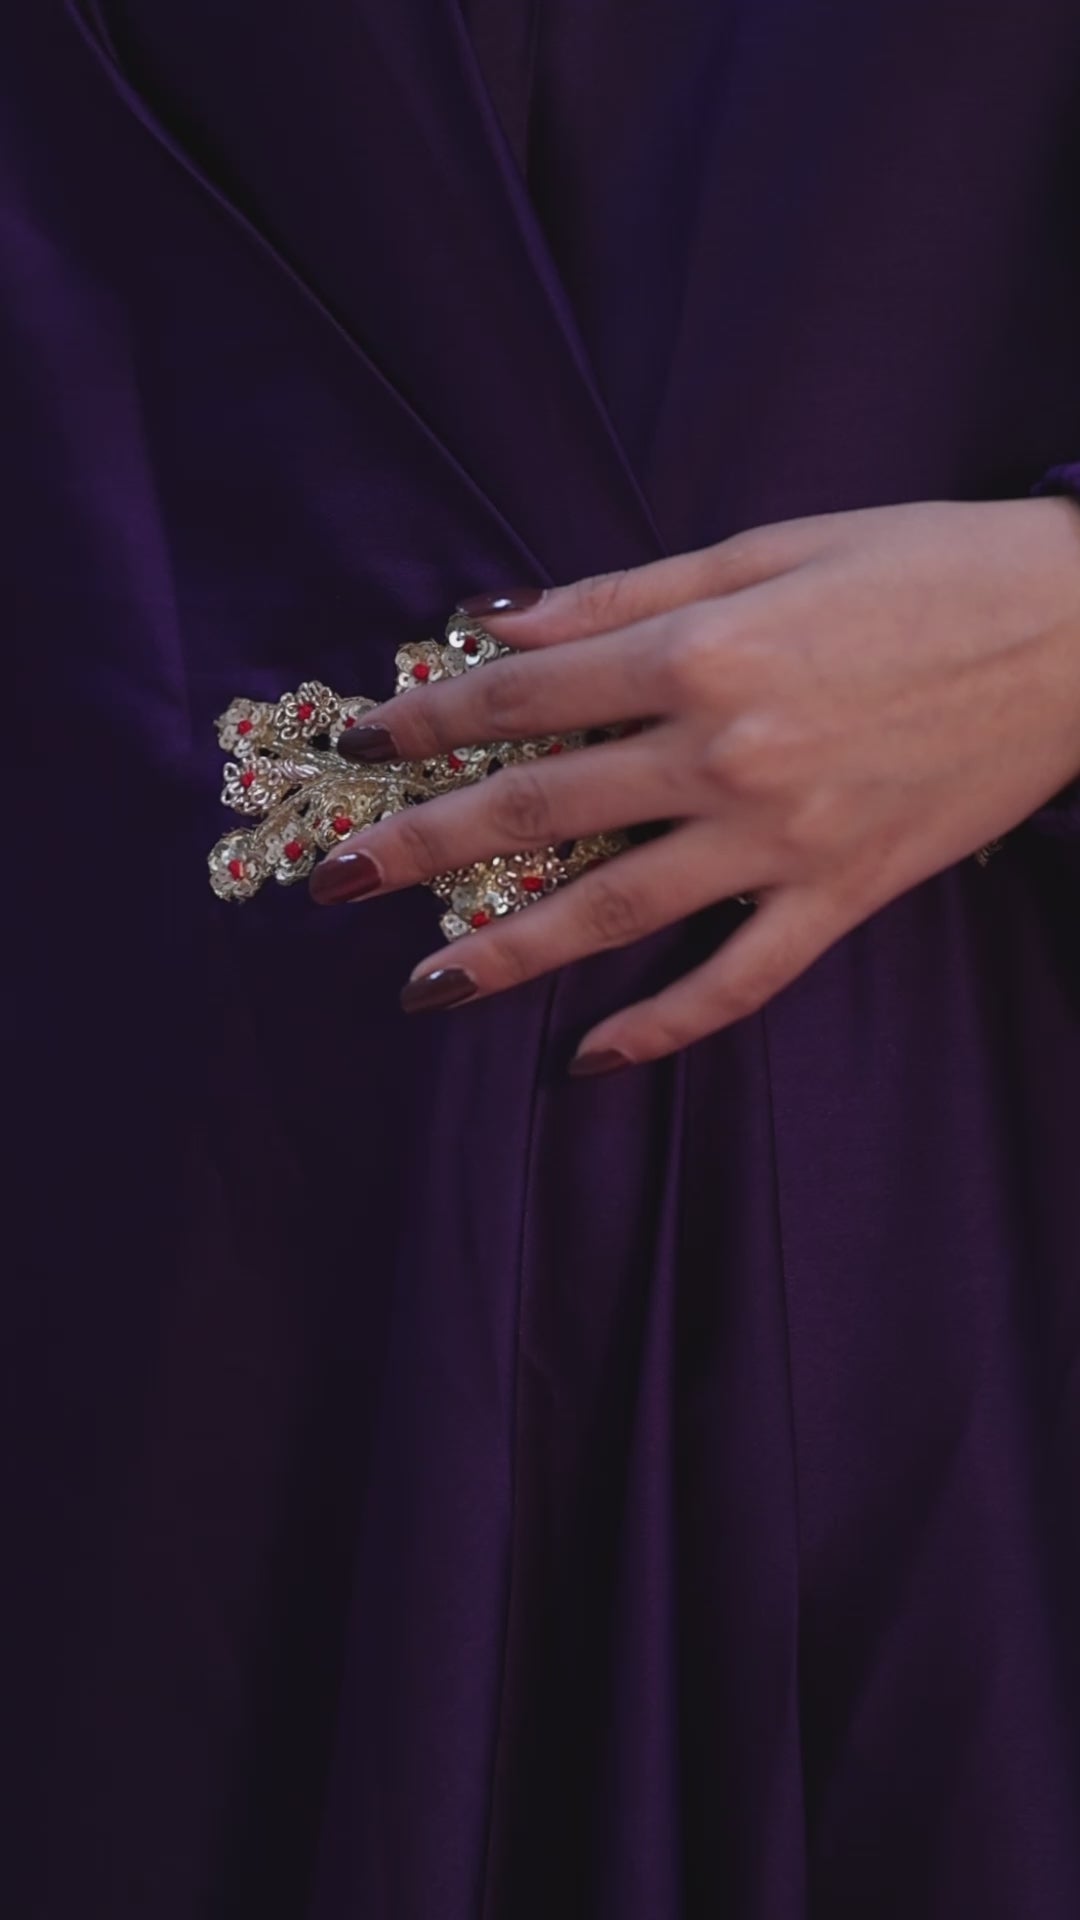 SASYA - Purple Draped Kaftan Dress